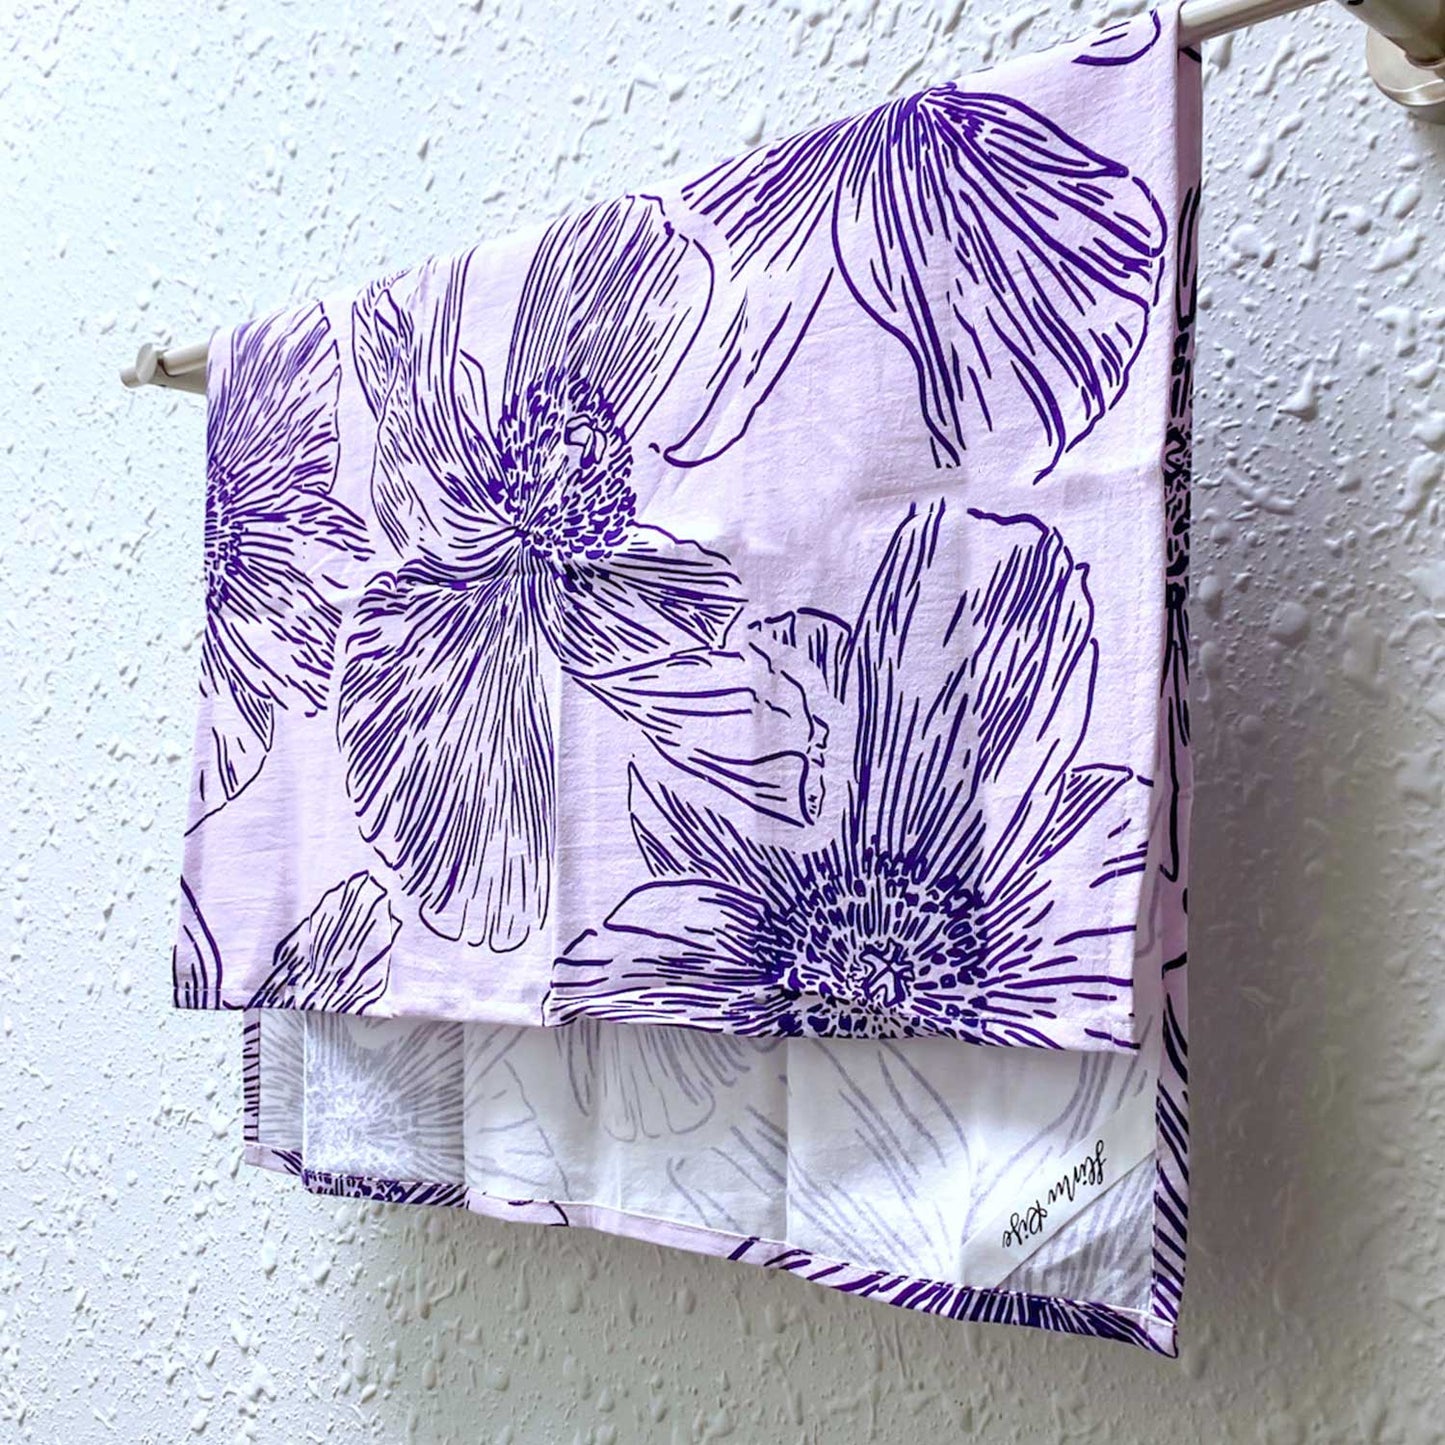 19" x 27" Cotton Flour Sack Tea Towel - Pua Kala Purple